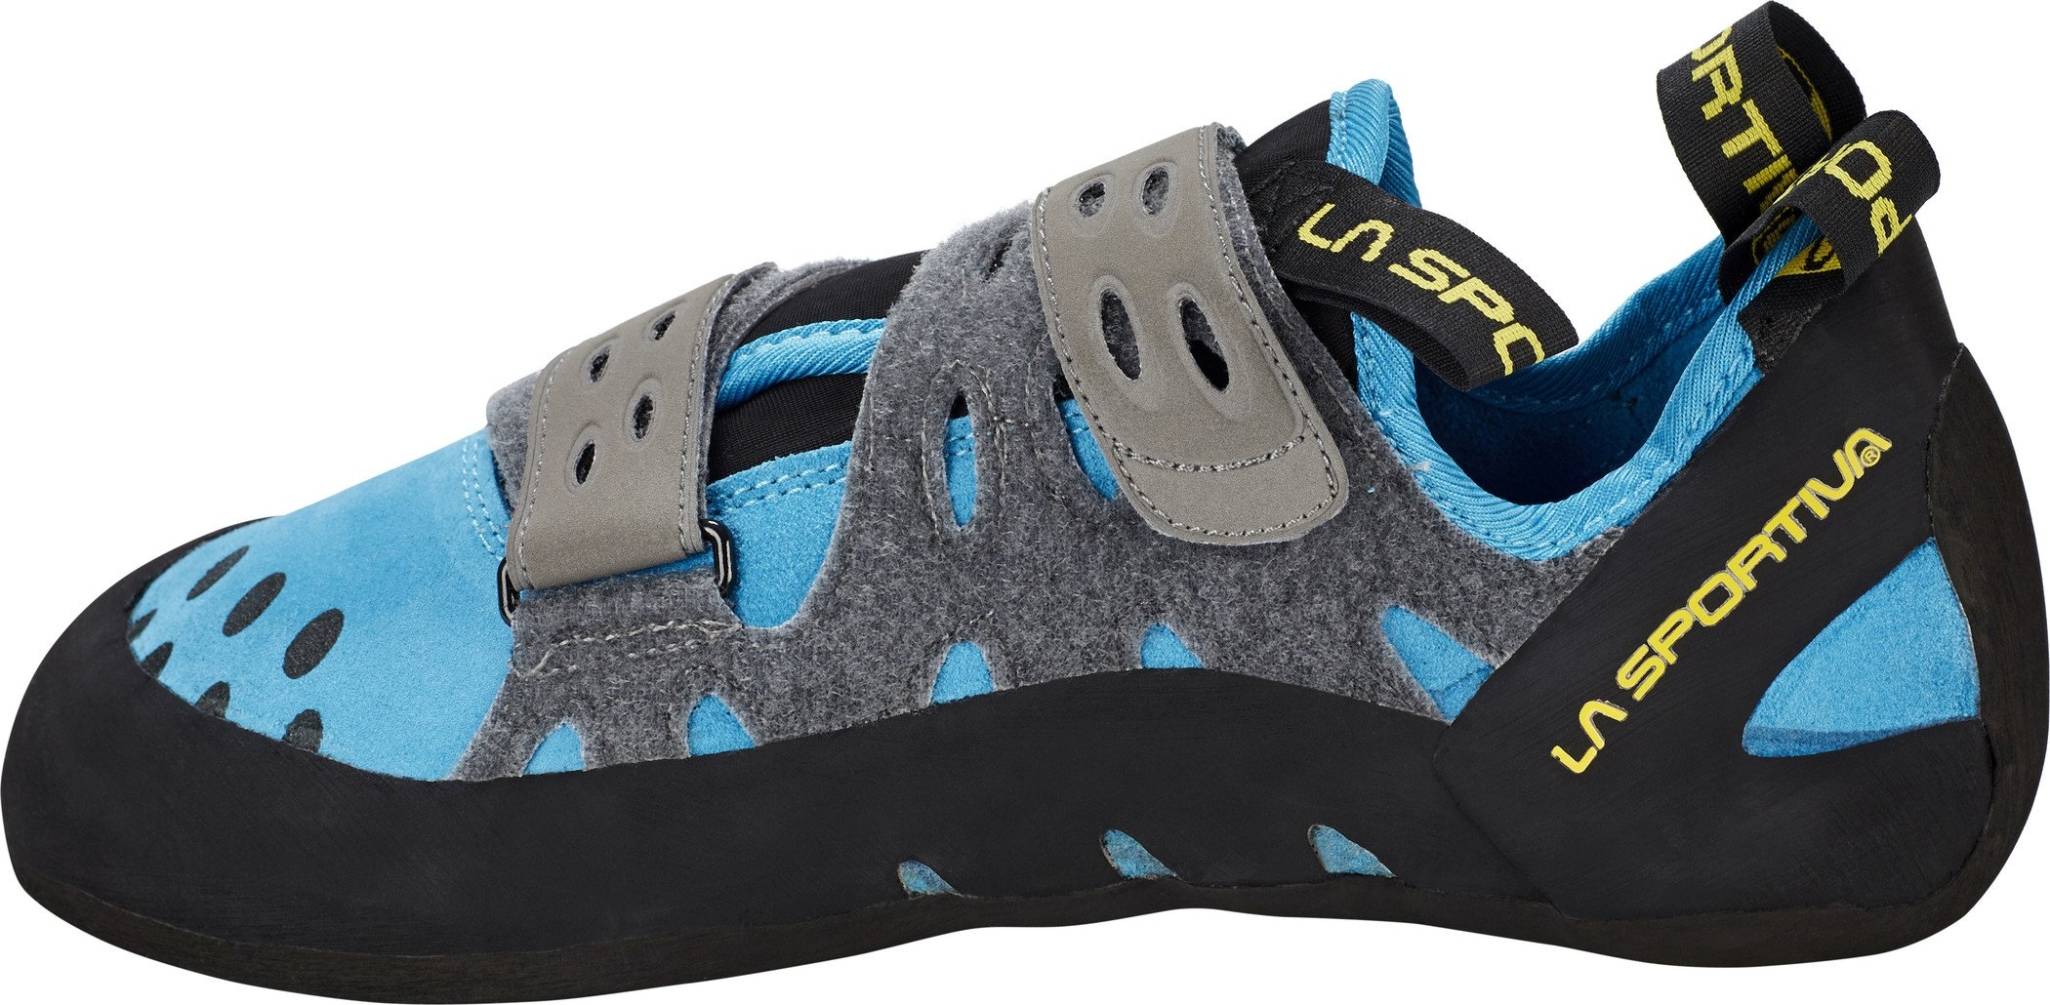 tarantula rock climbing shoes